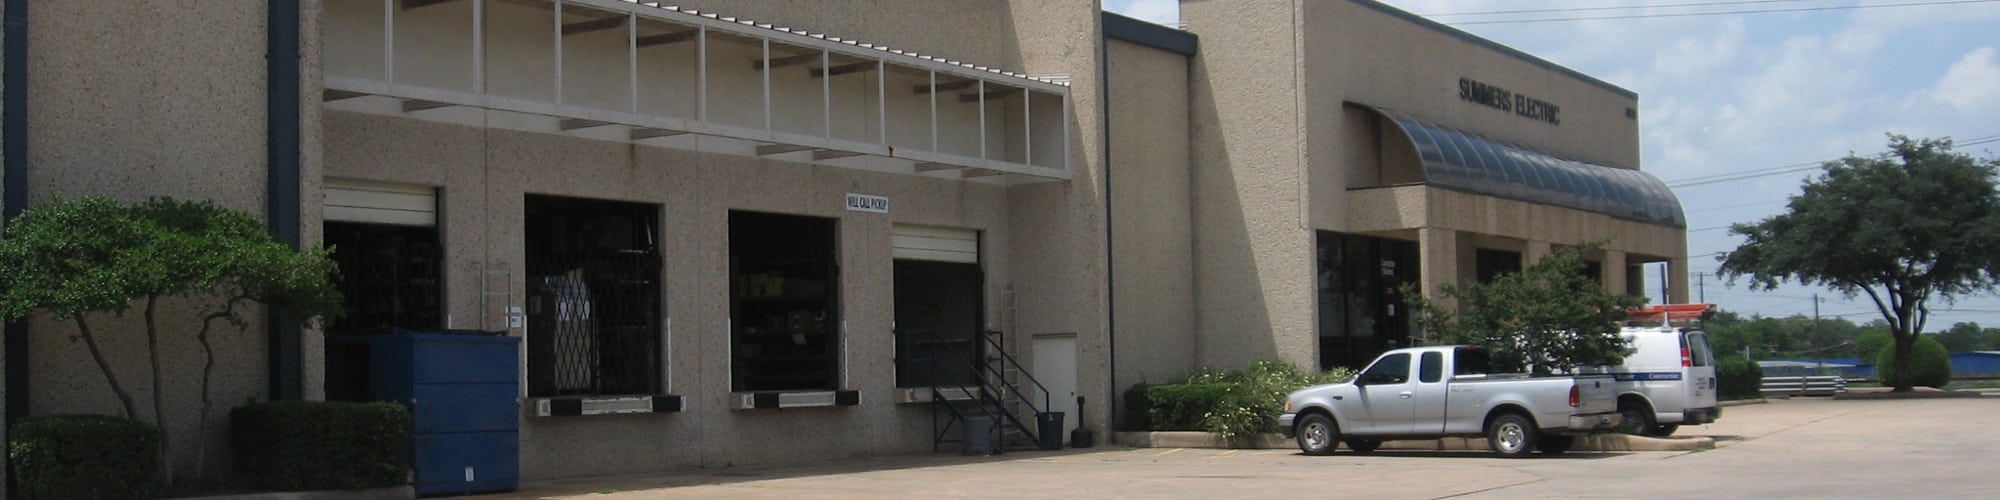 Ben White 6 Exterior | 3910 S. Industrial Boulevard in Austin, Texas